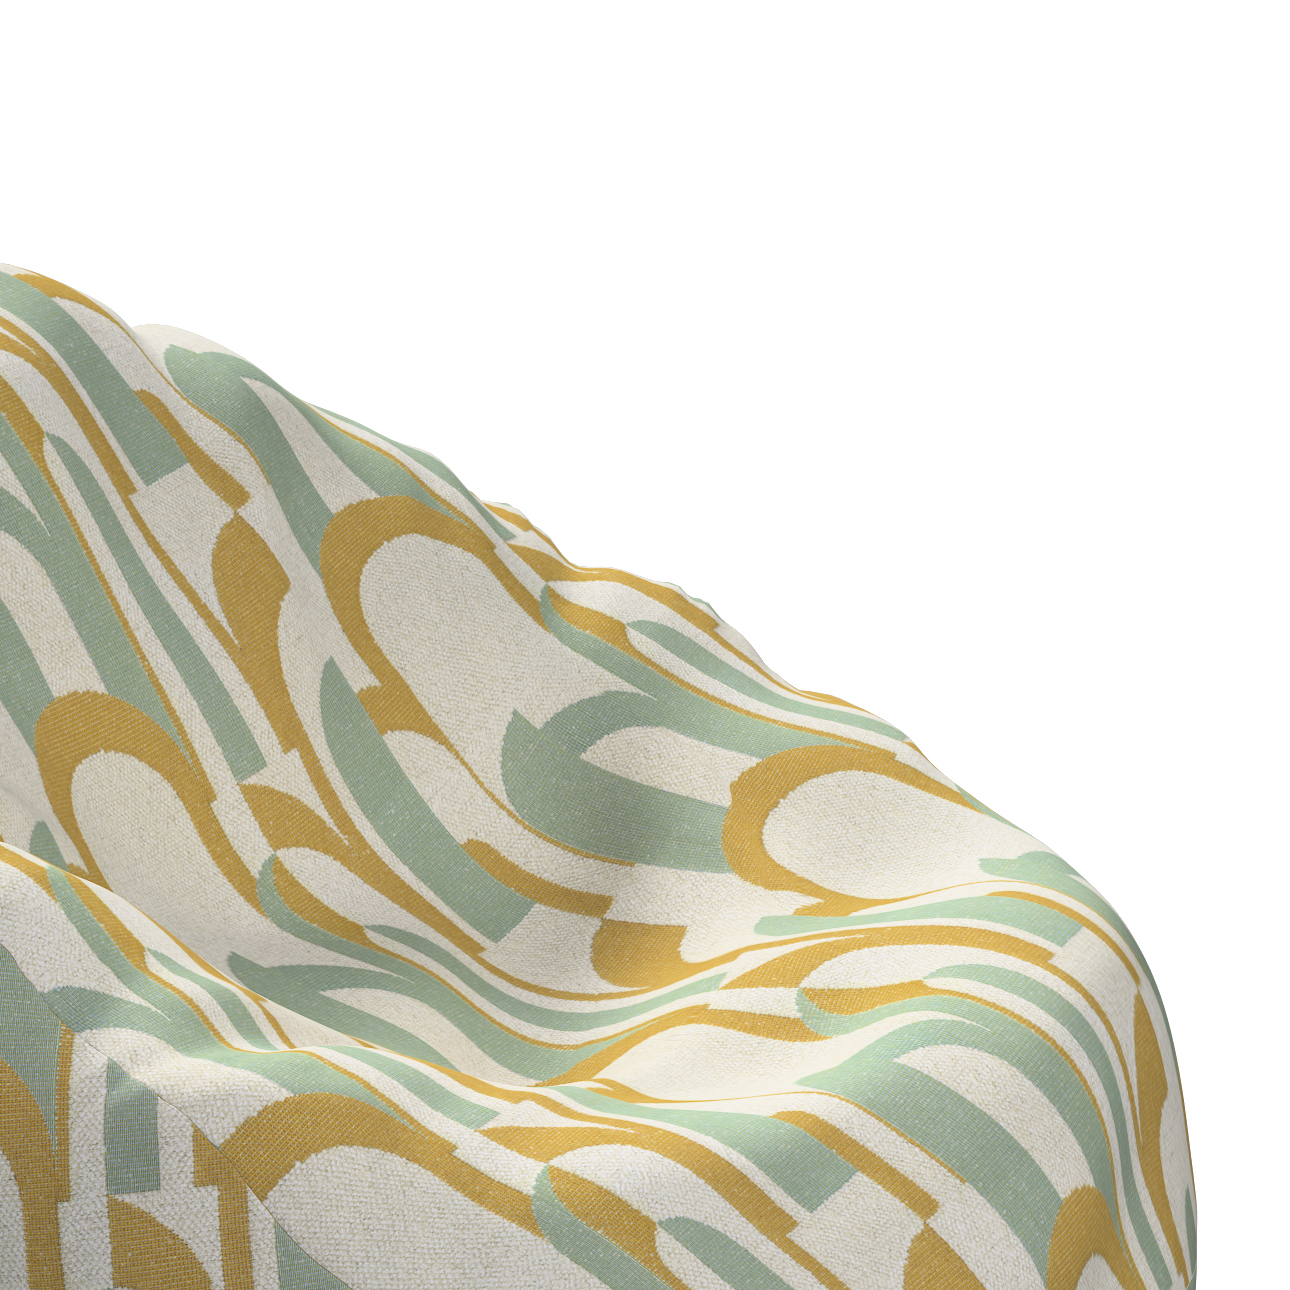 Bezug für Sitzsack, mintgrün-gelb, Bezug für Sitzsack Ø60 x 105 cm, Cosy Ho günstig online kaufen